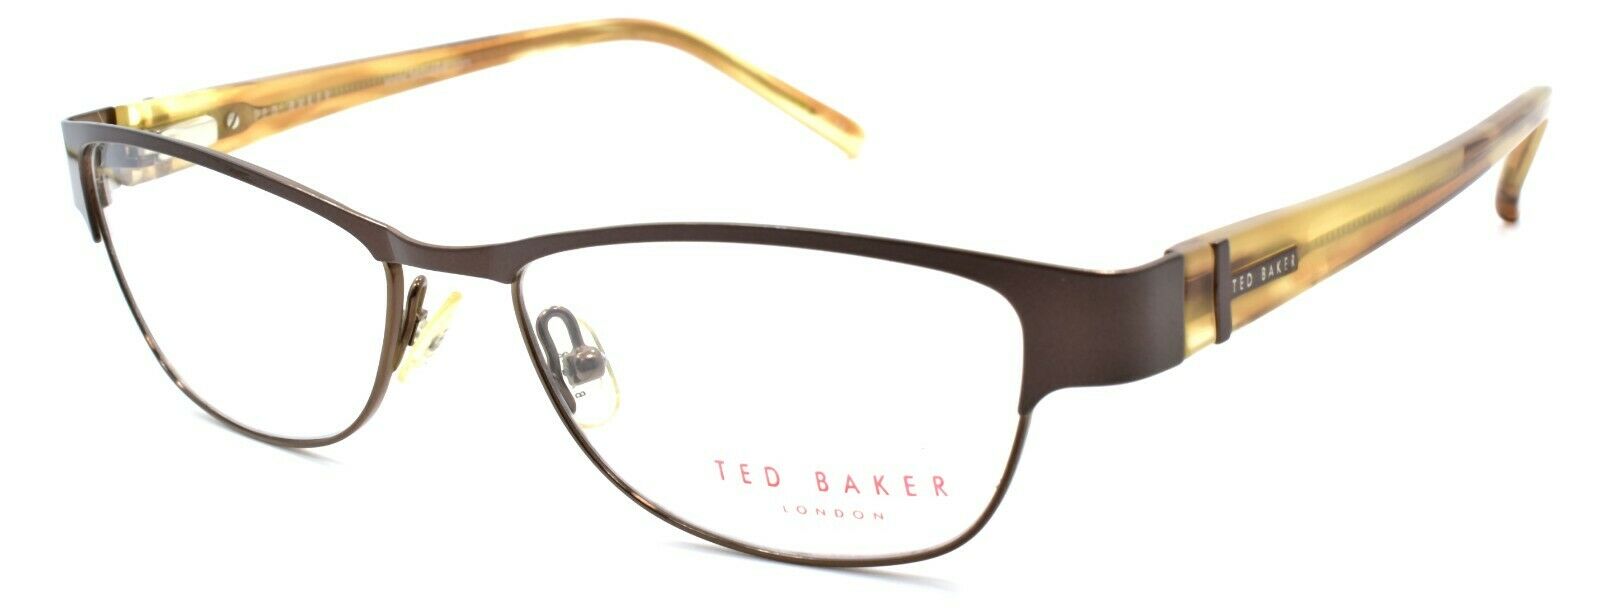 1-Ted Baker Mellor 2209 147 Women's Eyeglasses Frames 51-16-135 Pearl Brown-4894327037018-IKSpecs